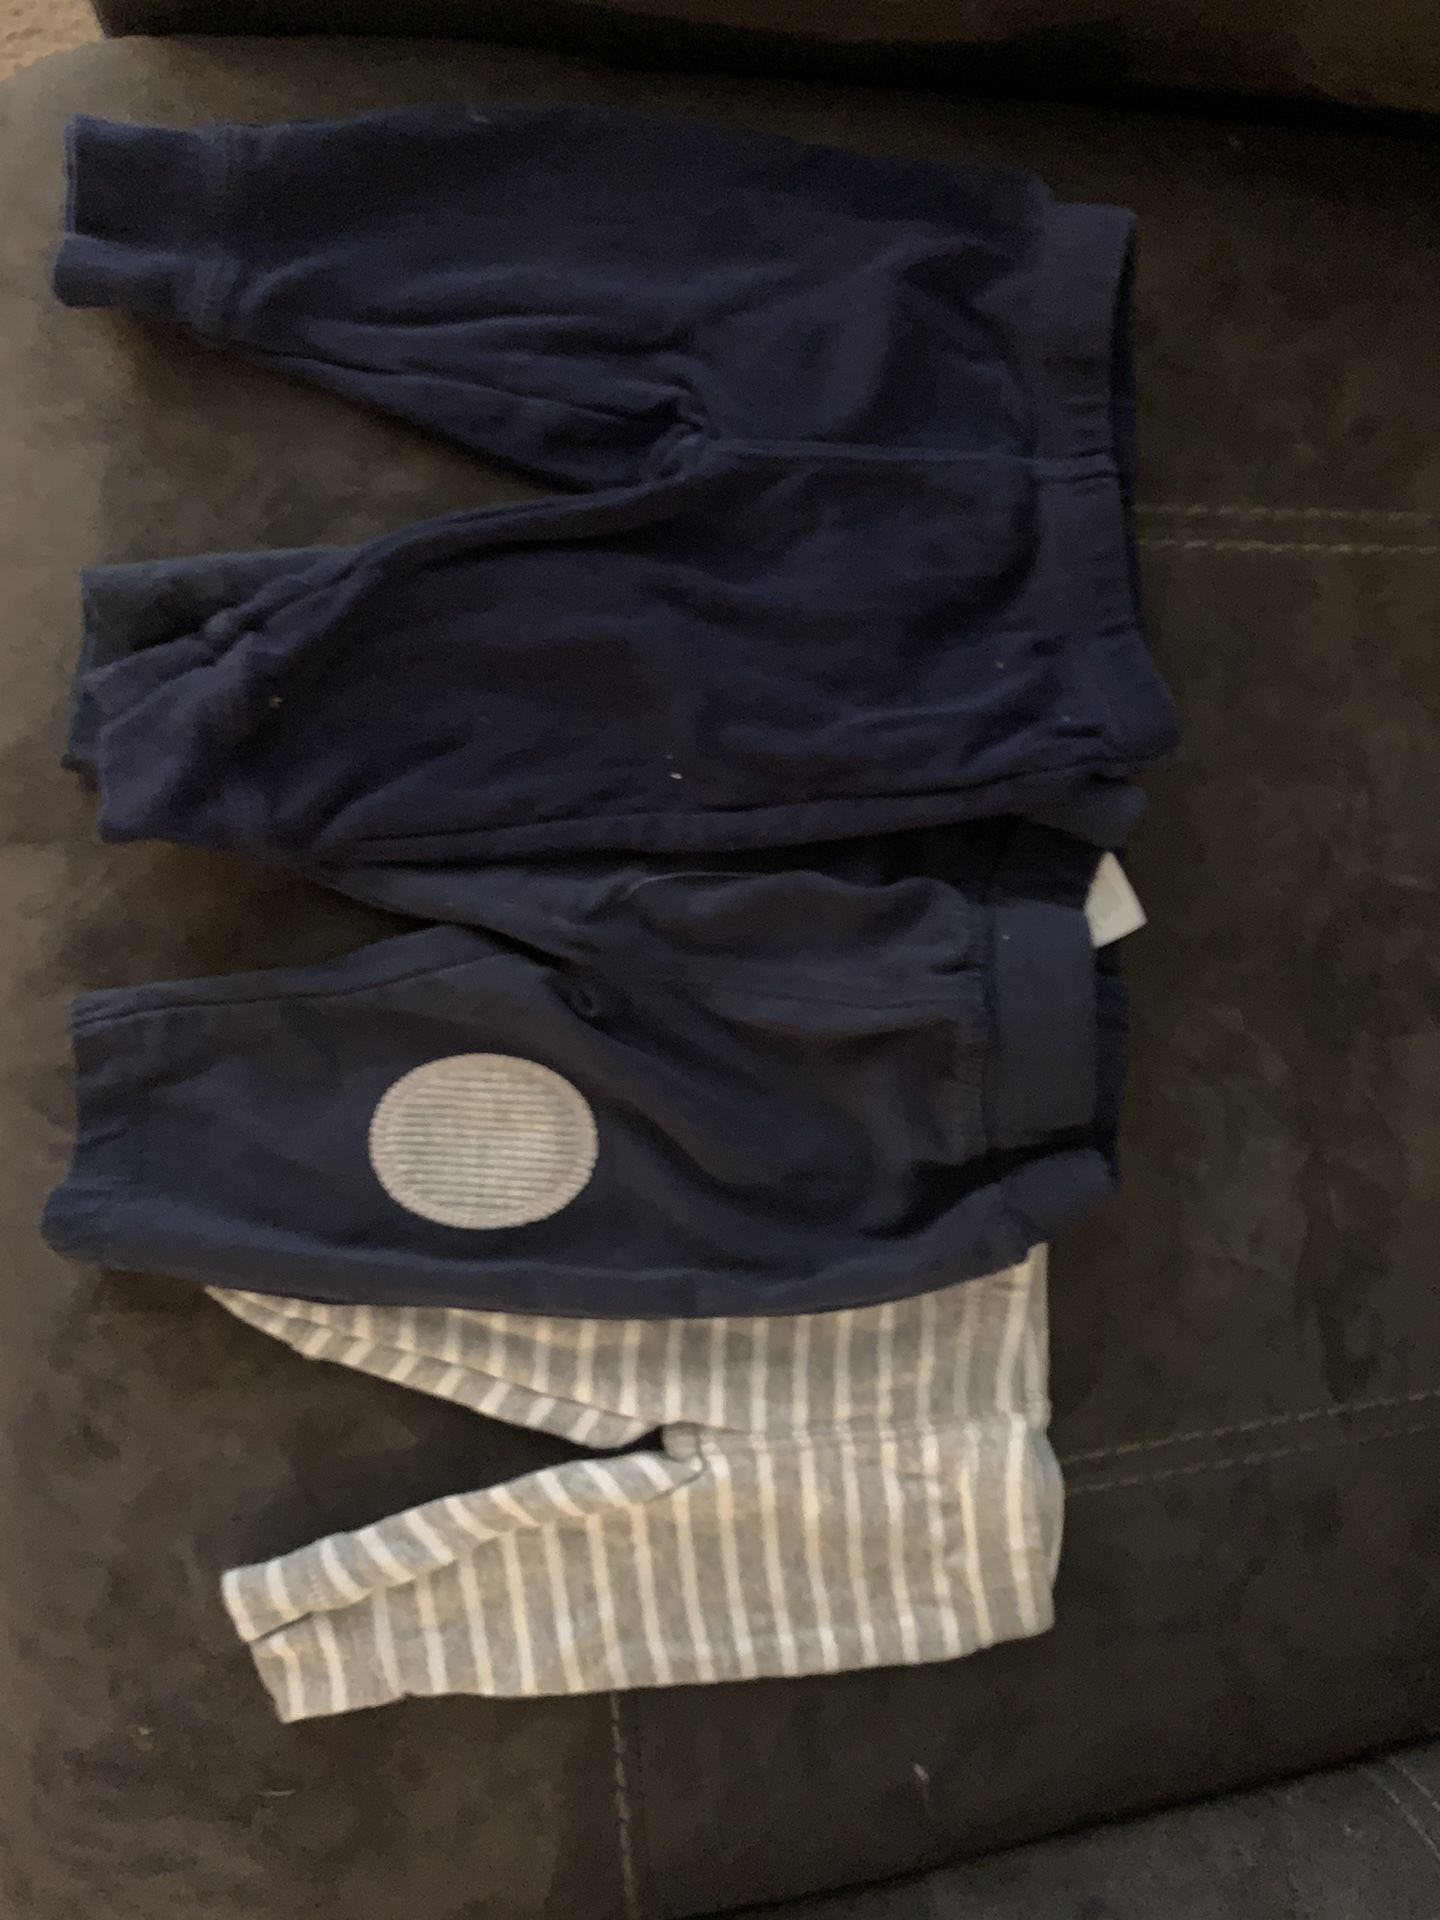 Three pair of newborn pants